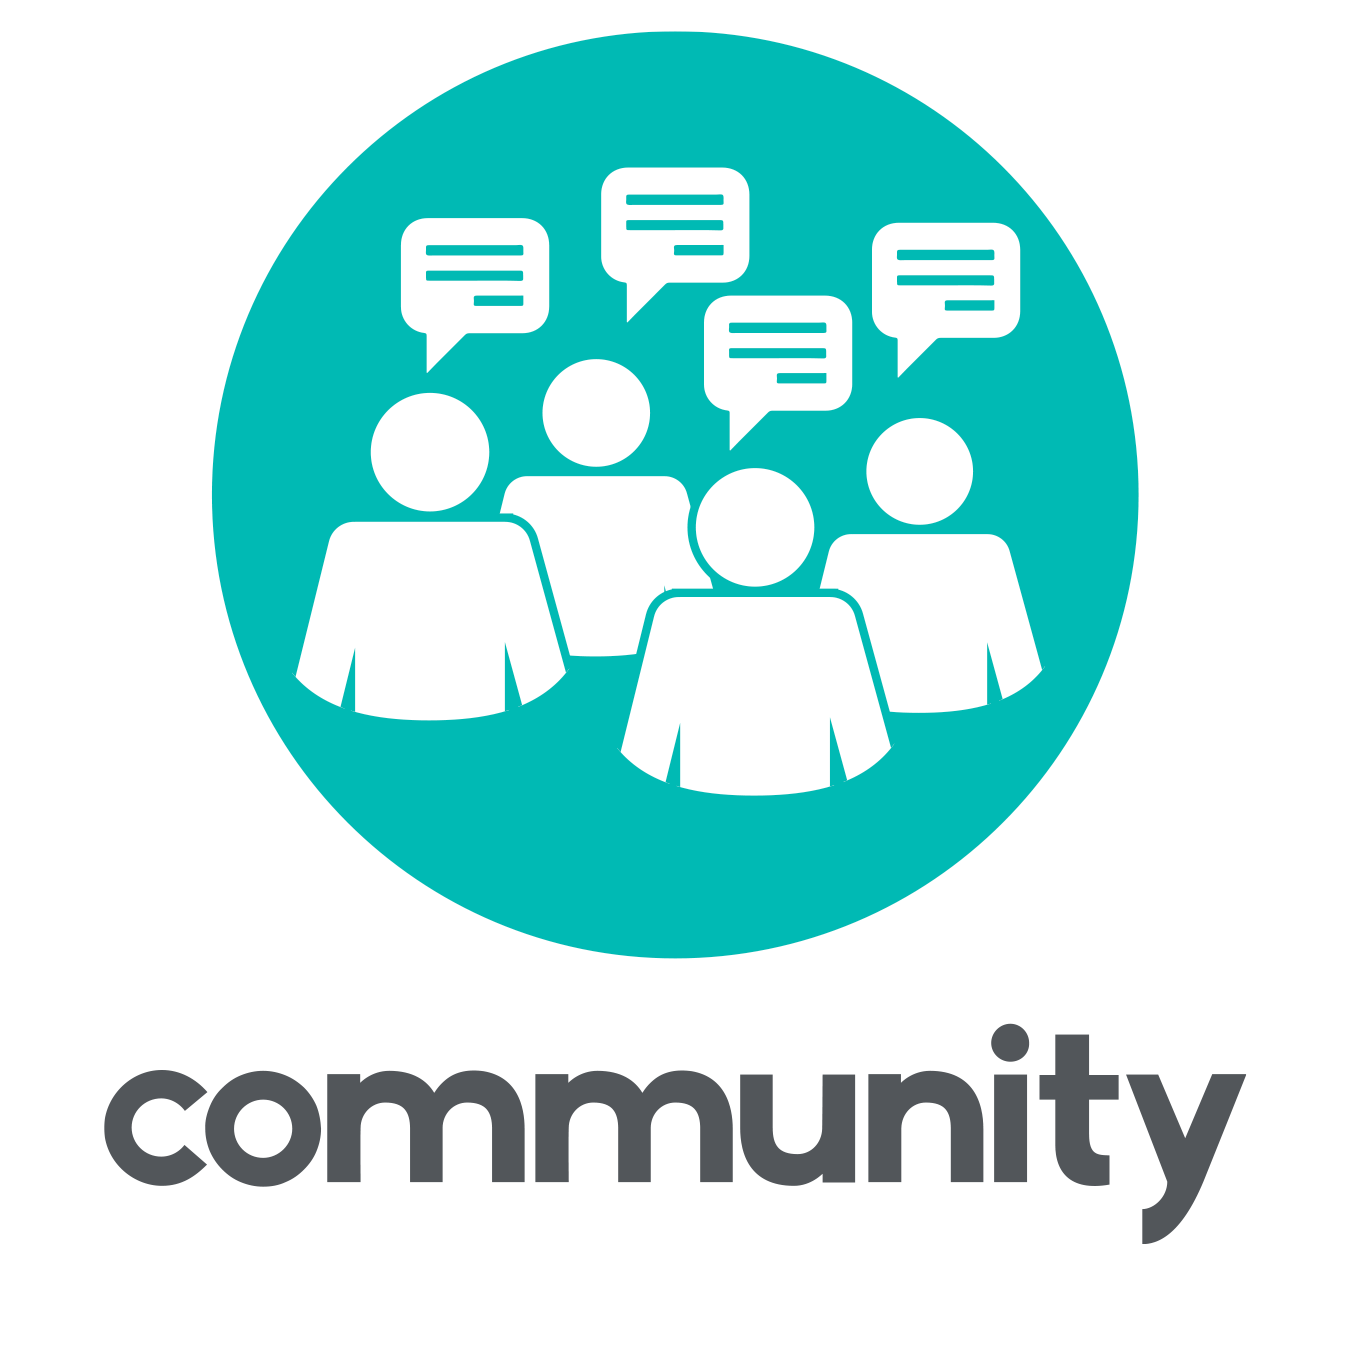 Community (four figures with speech bubbles)